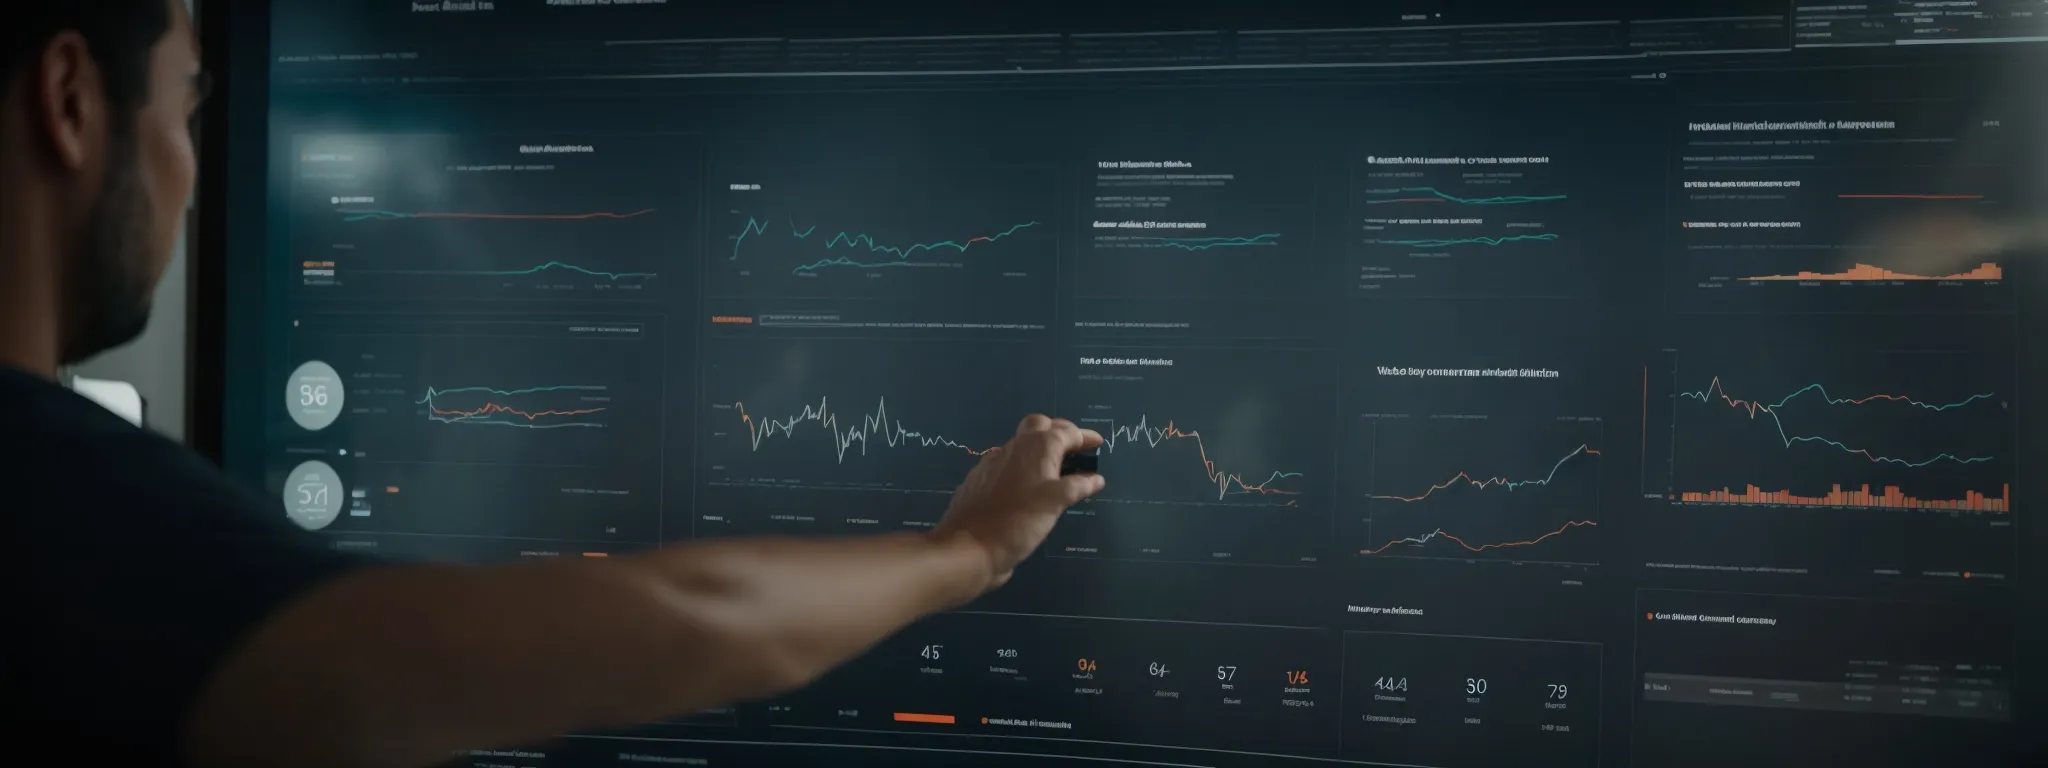 a marketer adjusts a digital marketing dashboard on a large interactive screen, showcasing various customer segments and conversion metrics.